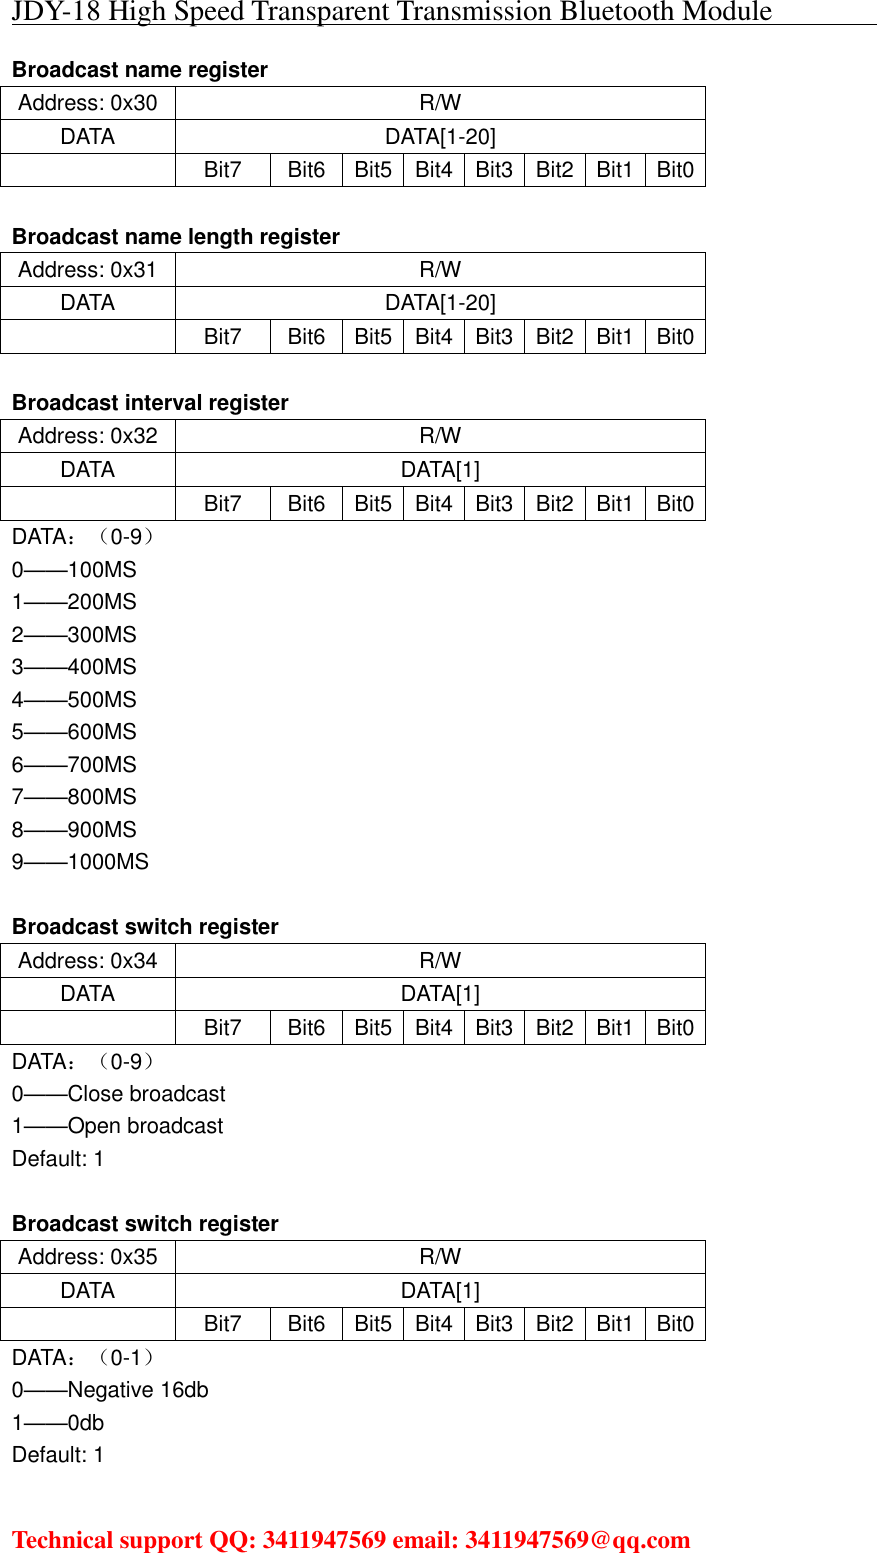 JDY-18 High Speed Transparent Transmission Bluetooth Module                                     Technical support QQ: 3411947569 email: 3411947569@qq.com   Broadcast name register Address: 0x30 R/W DATA DATA[1-20]  Bit7 Bit6 Bit5 Bit4 Bit3 Bit2 Bit1 Bit0  Broadcast name length register Address: 0x31 R/W DATA DATA[1-20]  Bit7 Bit6 Bit5 Bit4 Bit3 Bit2 Bit1 Bit0  Broadcast interval register Address: 0x32 R/W DATA DATA[1]  Bit7 Bit6 Bit5 Bit4 Bit3 Bit2 Bit1 Bit0 DATA：（0-9） 0——100MS 1——200MS 2——300MS 3——400MS 4——500MS 5——600MS 6——700MS 7——800MS 8——900MS 9——1000MS  Broadcast switch register Address: 0x34 R/W DATA DATA[1]  Bit7 Bit6 Bit5 Bit4 Bit3 Bit2 Bit1 Bit0 DATA：（0-9） 0——Close broadcast 1——Open broadcast Default: 1  Broadcast switch register Address: 0x35 R/W DATA DATA[1]  Bit7 Bit6 Bit5 Bit4 Bit3 Bit2 Bit1 Bit0 DATA：（0-1） 0——Negative 16db 1——0db Default: 1  